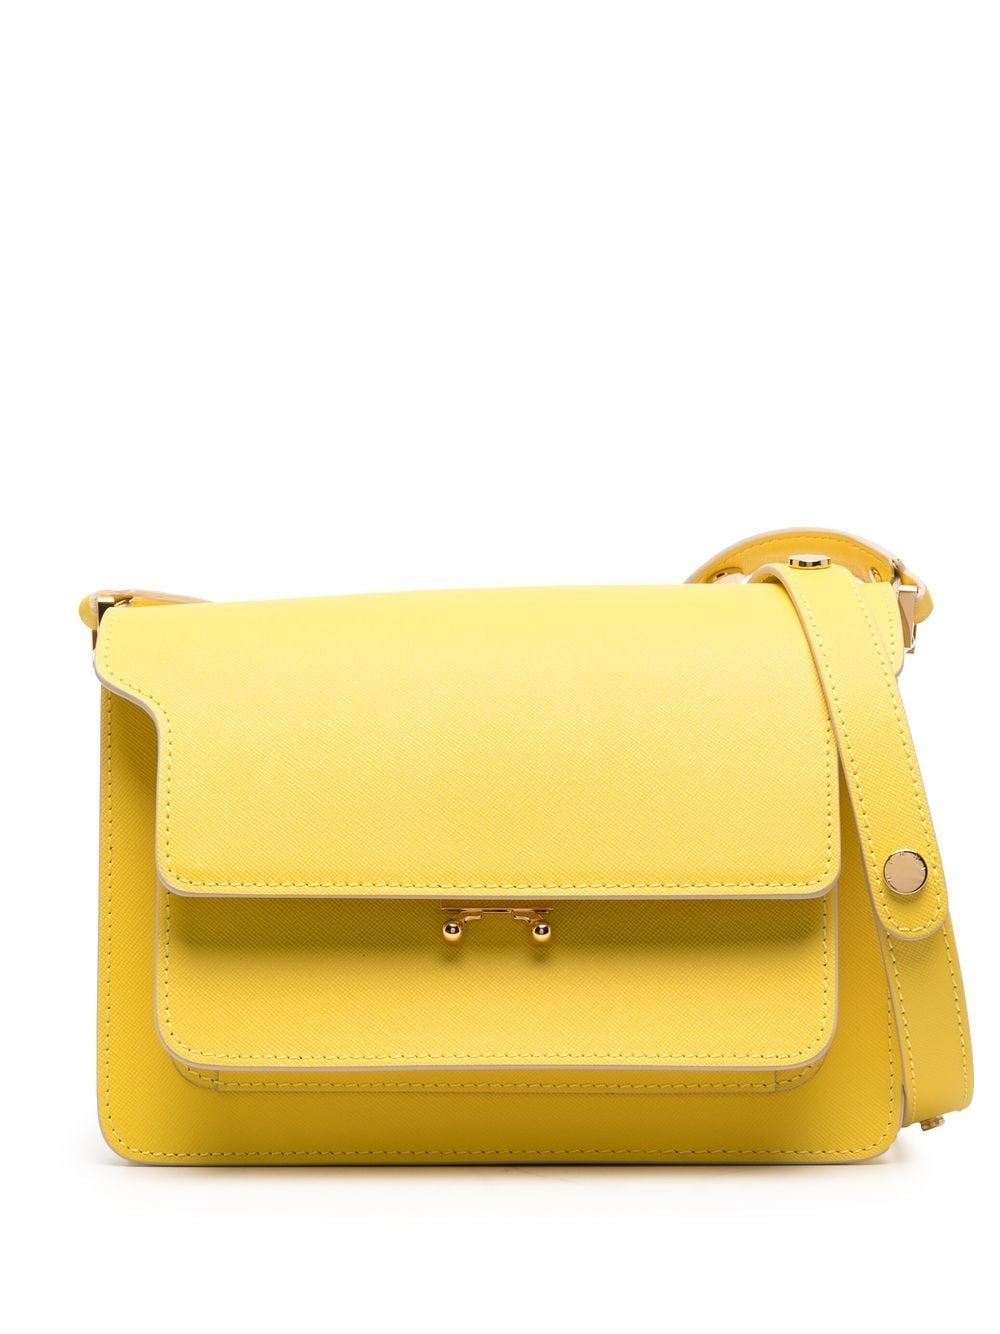 Marni Trunk leather shoulder bag - Yellow von Marni